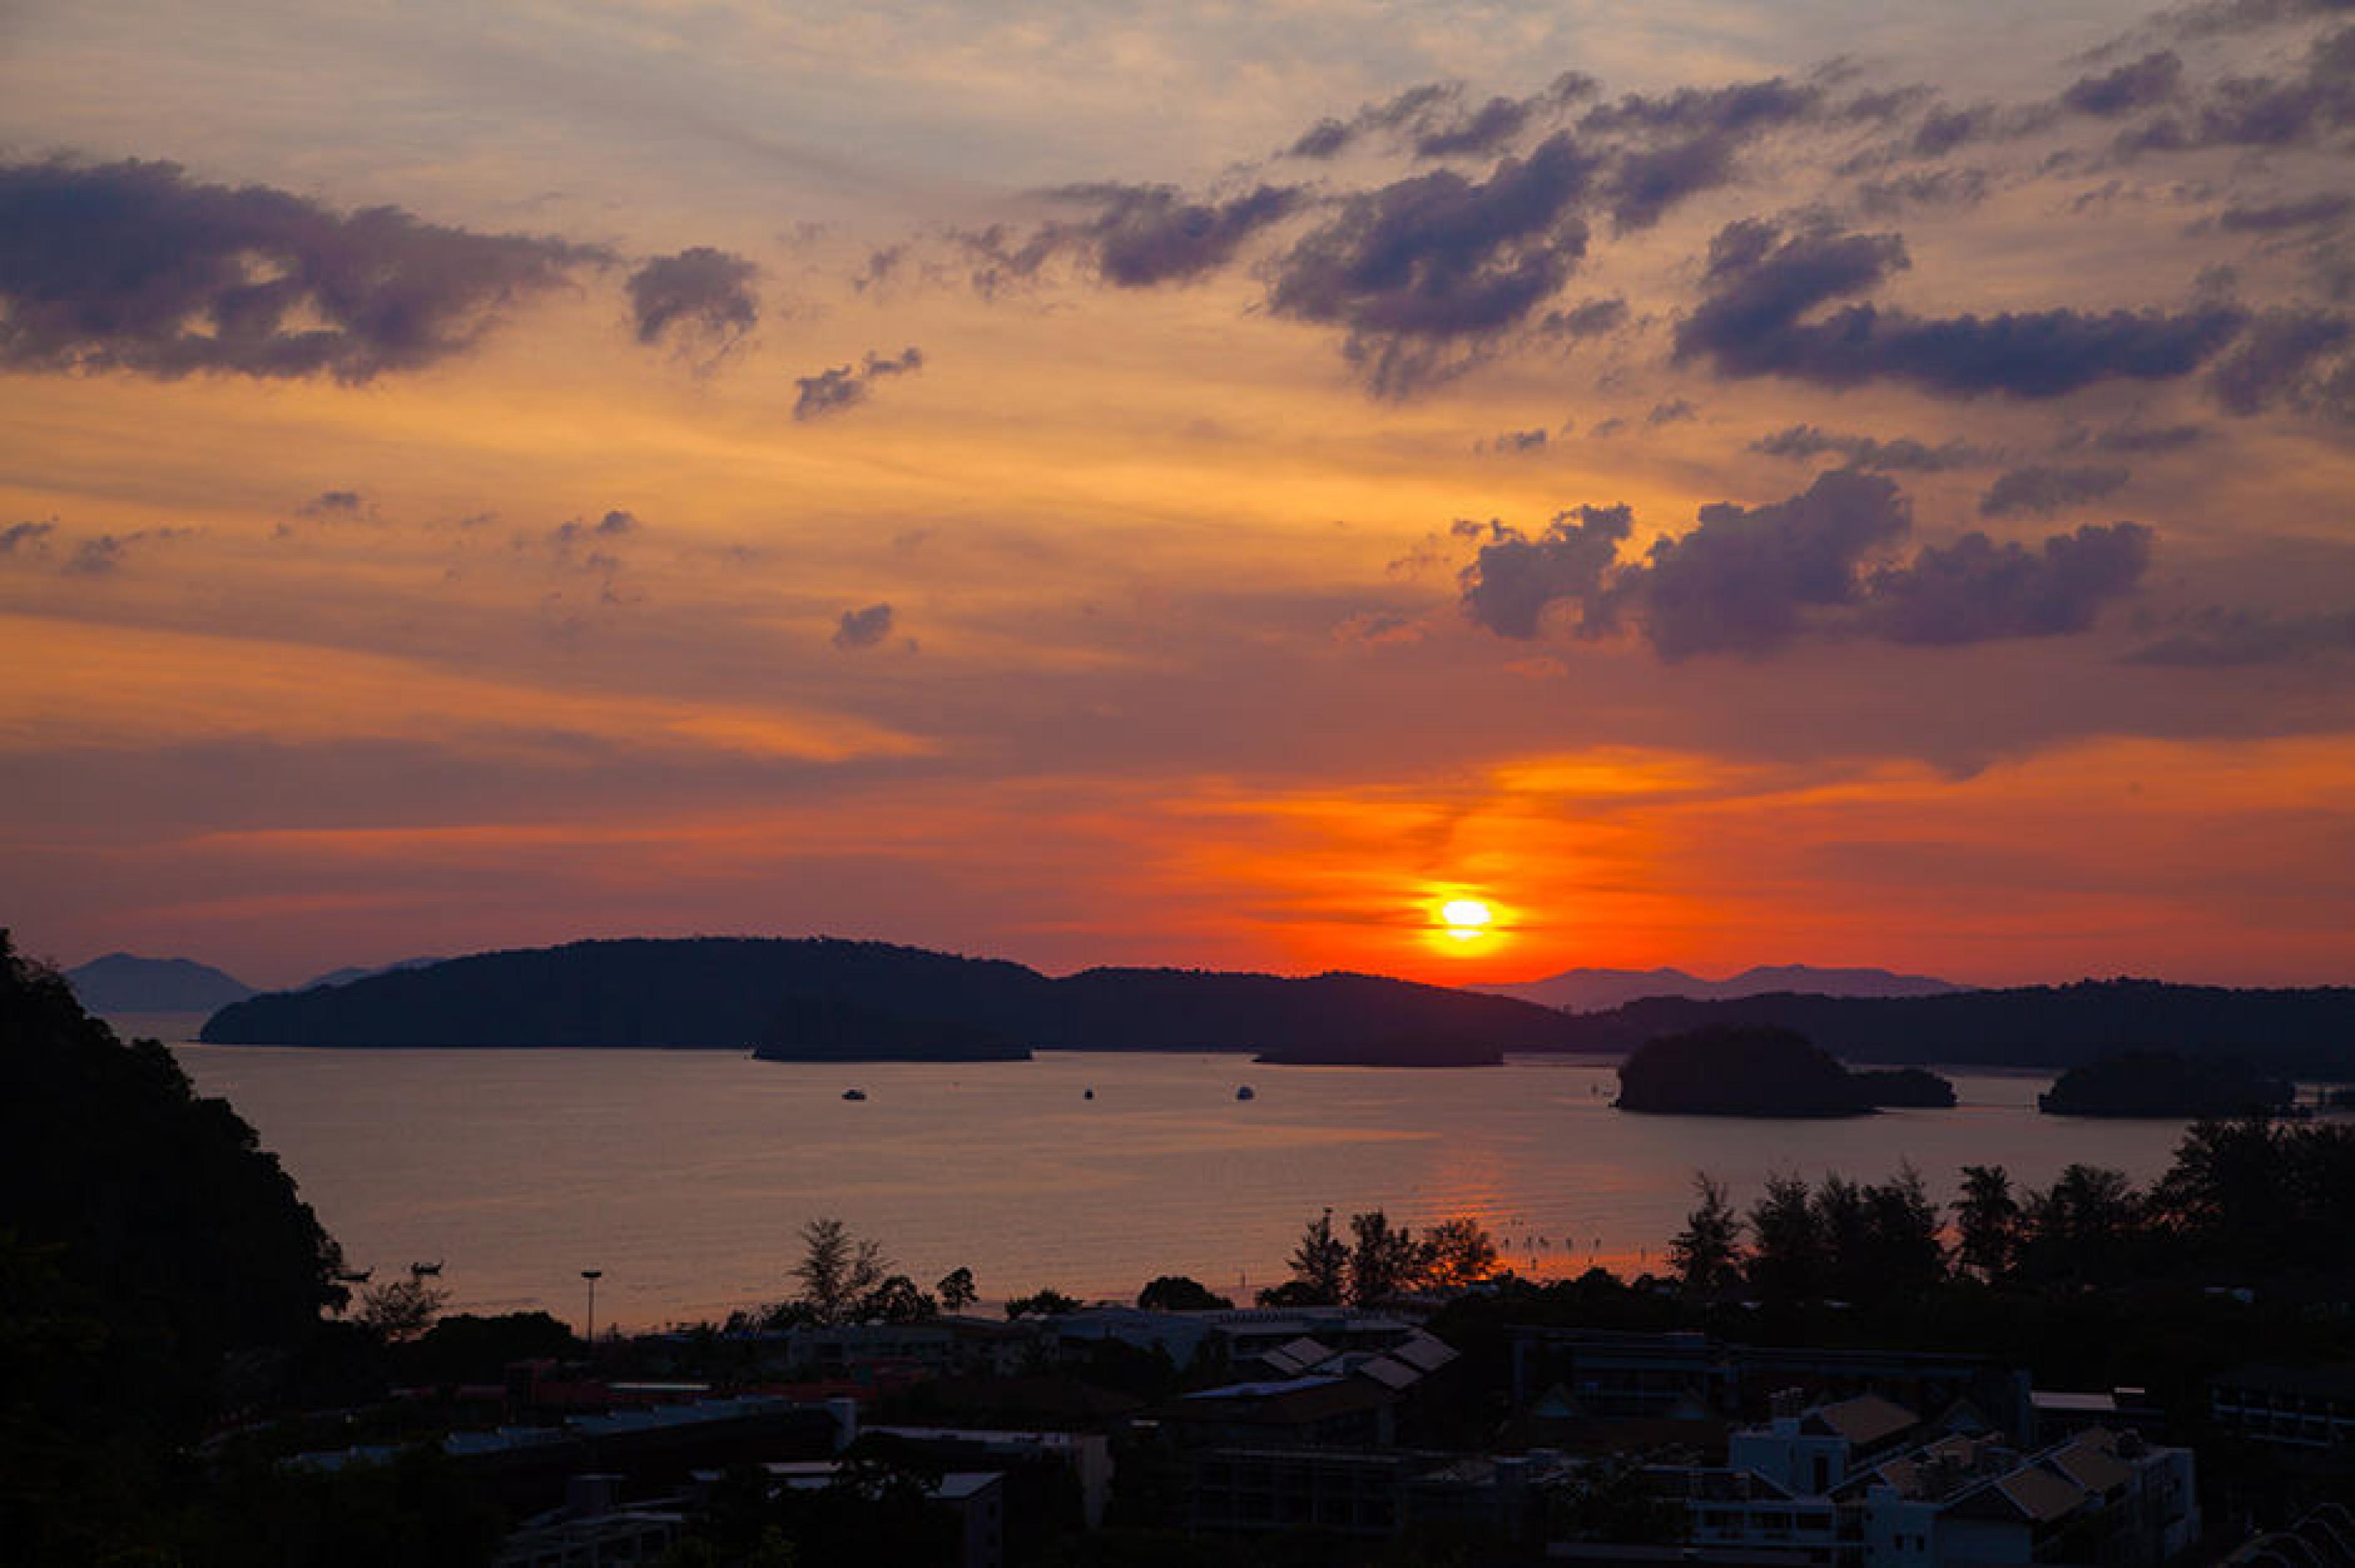 Sunset - The Hilltop, Krabi Province, Thailand